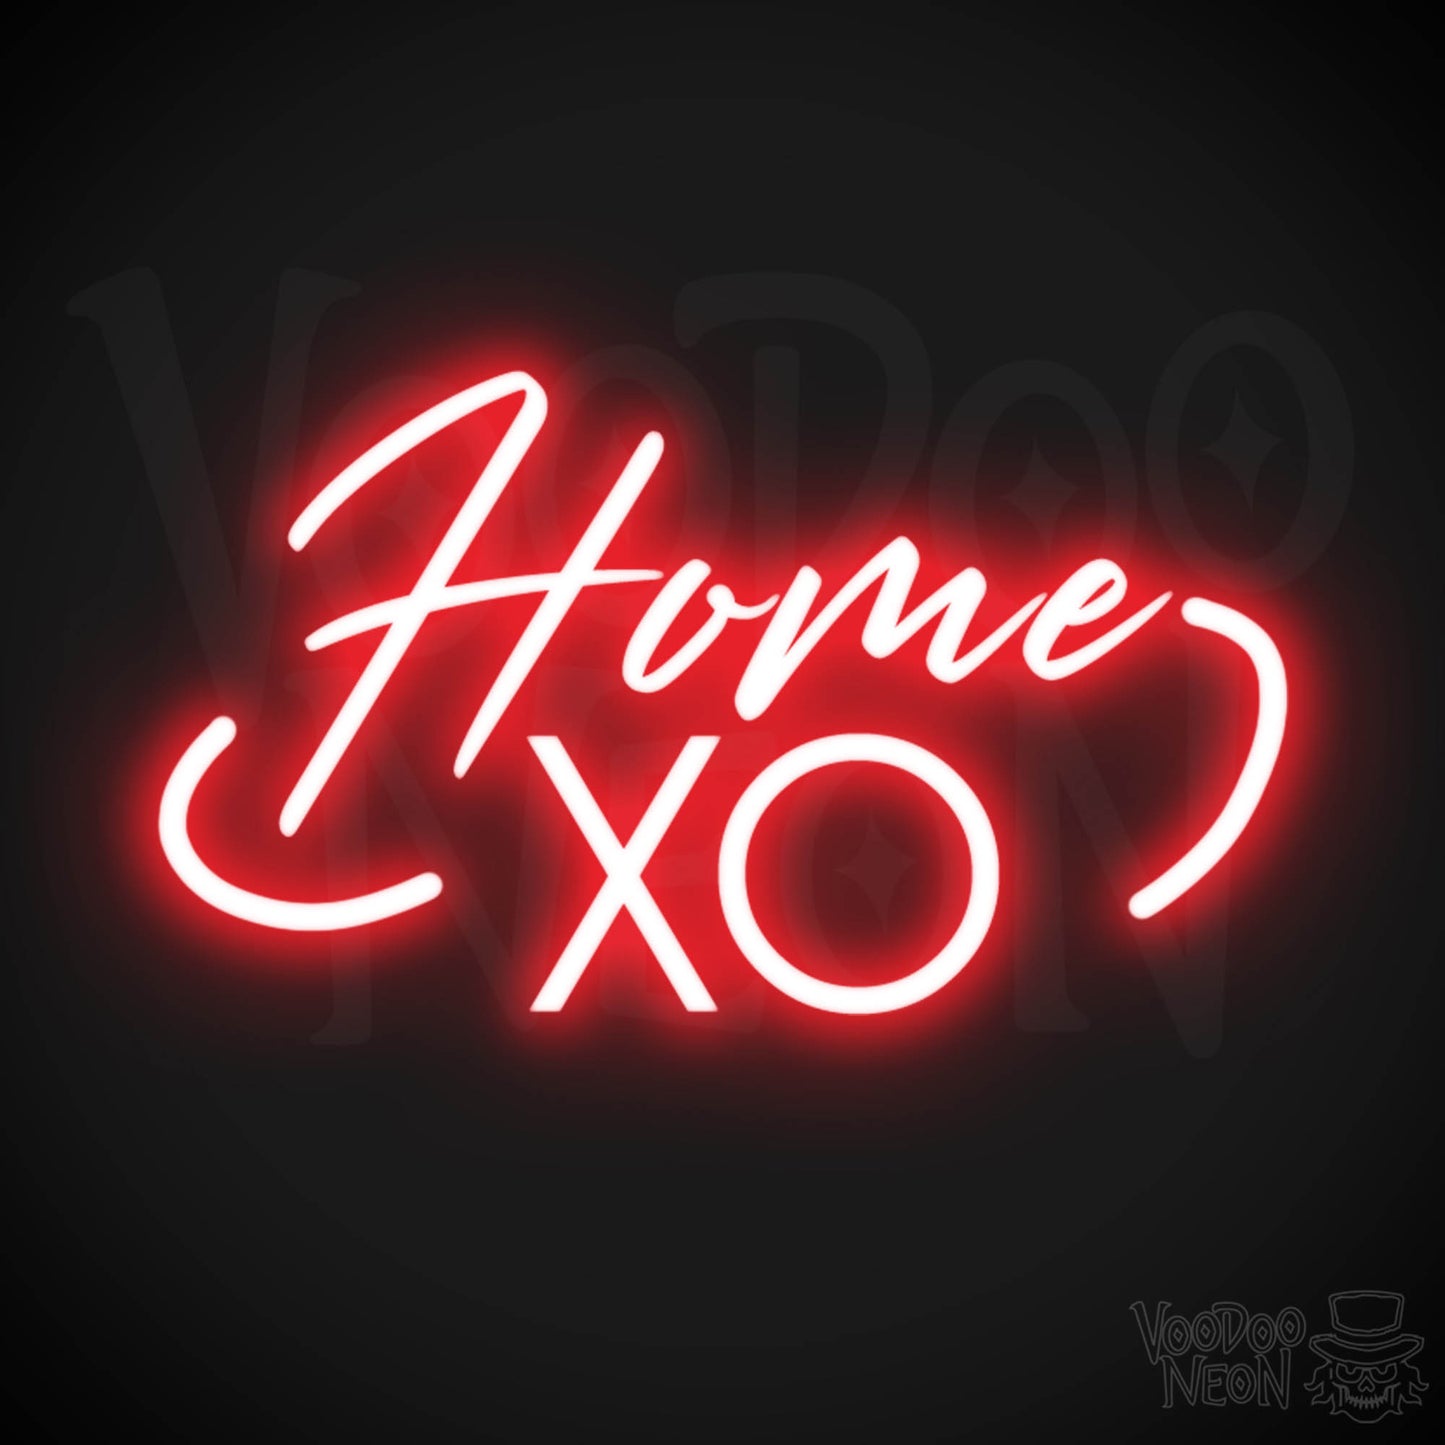 Home XO Neon Sign - Neon Home XO Sign - Wall Art - Color Red